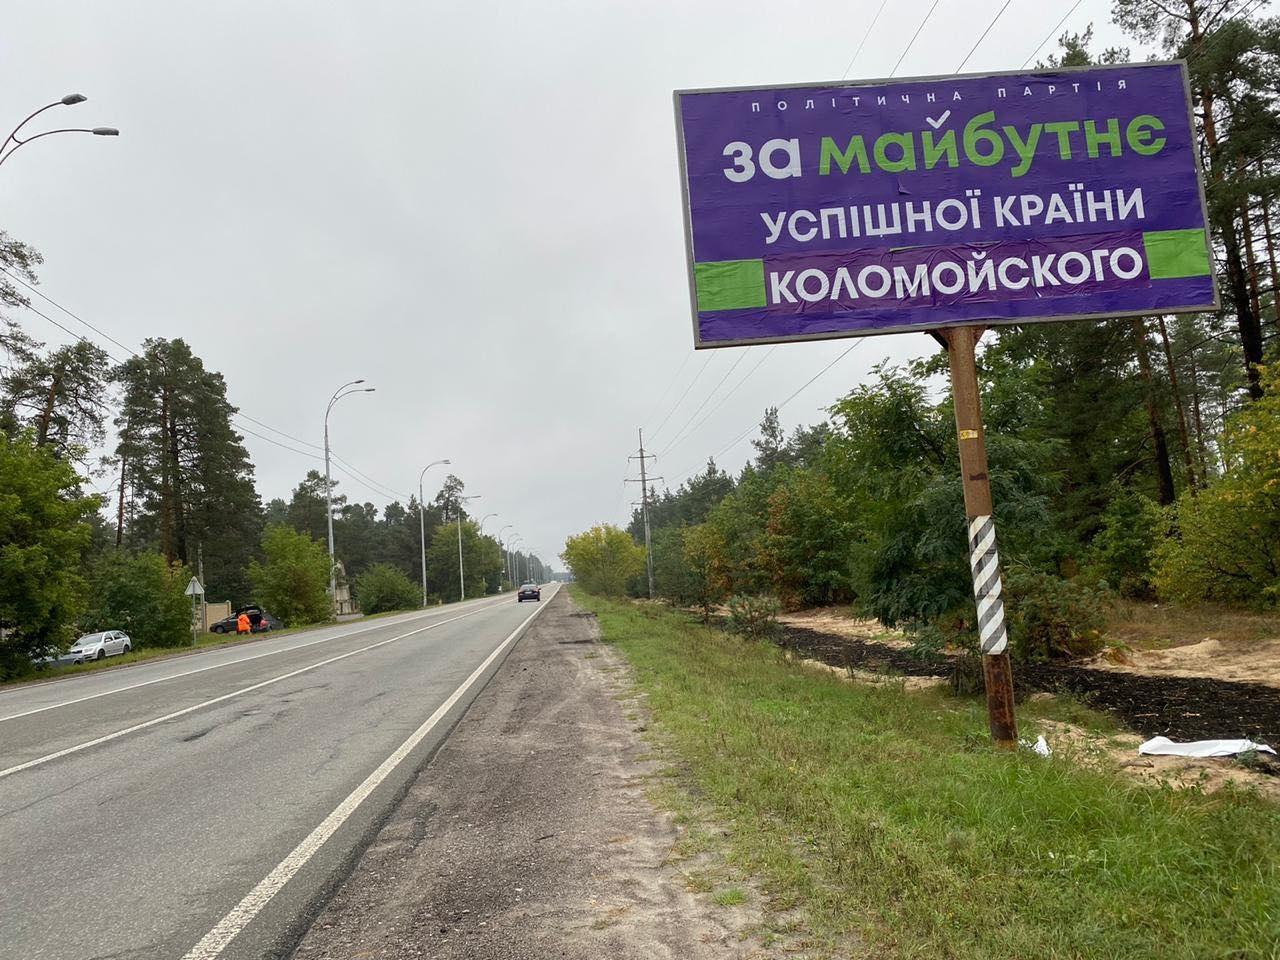 В Киеве на билбордах партии "За будущее" разместили наклейки с именем Коломойского. Фото: Страна